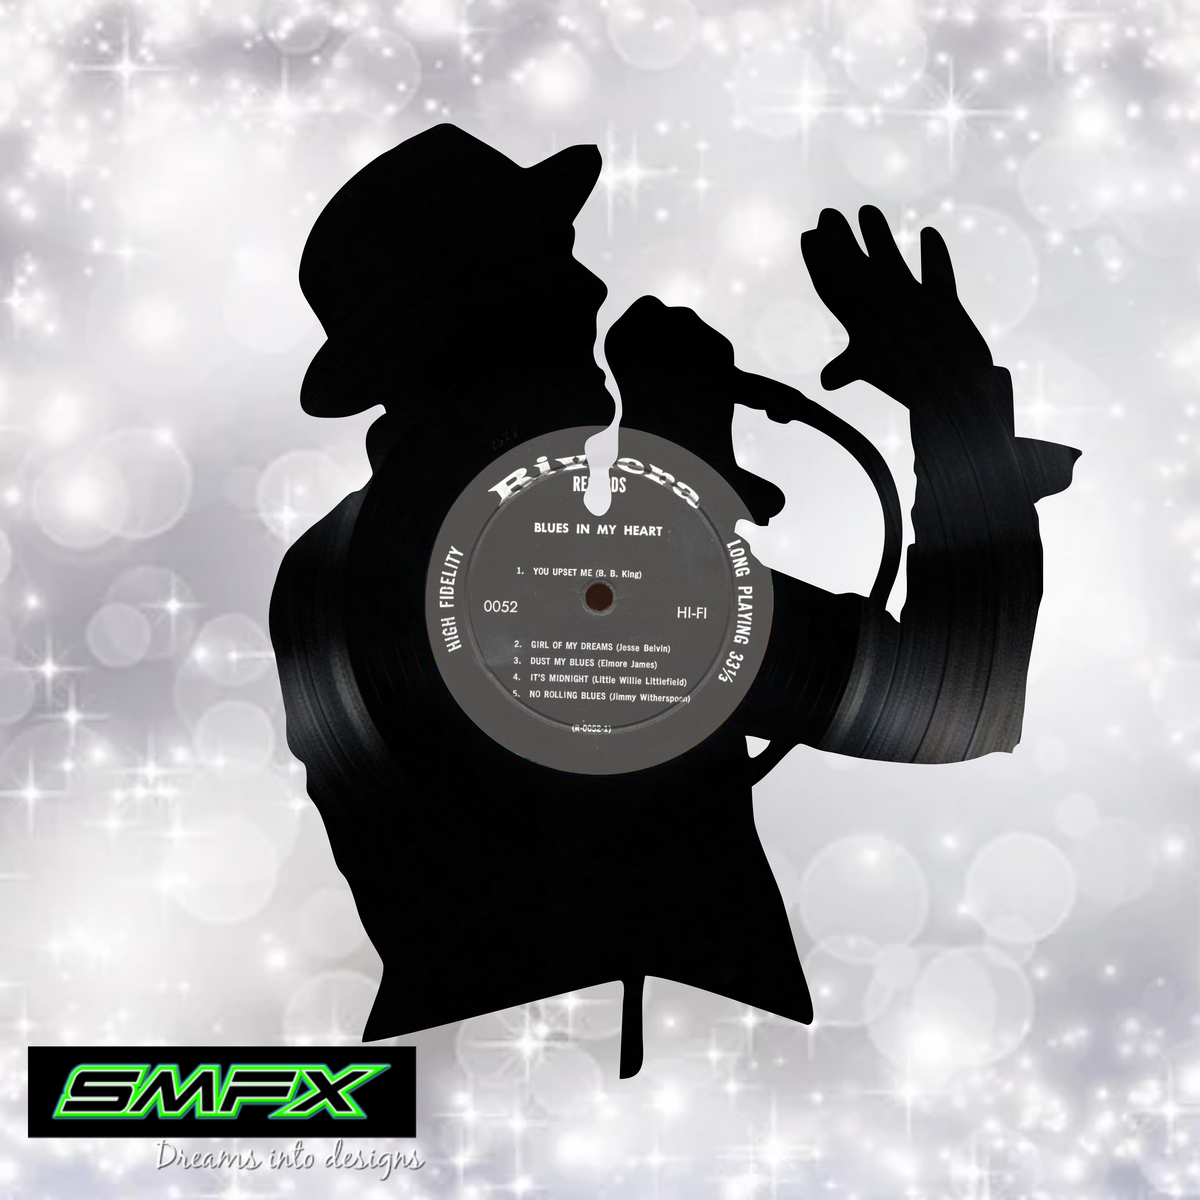 the tragically hip Laser Cut Vinyl Record artist representation or vin — SMFX  Designs